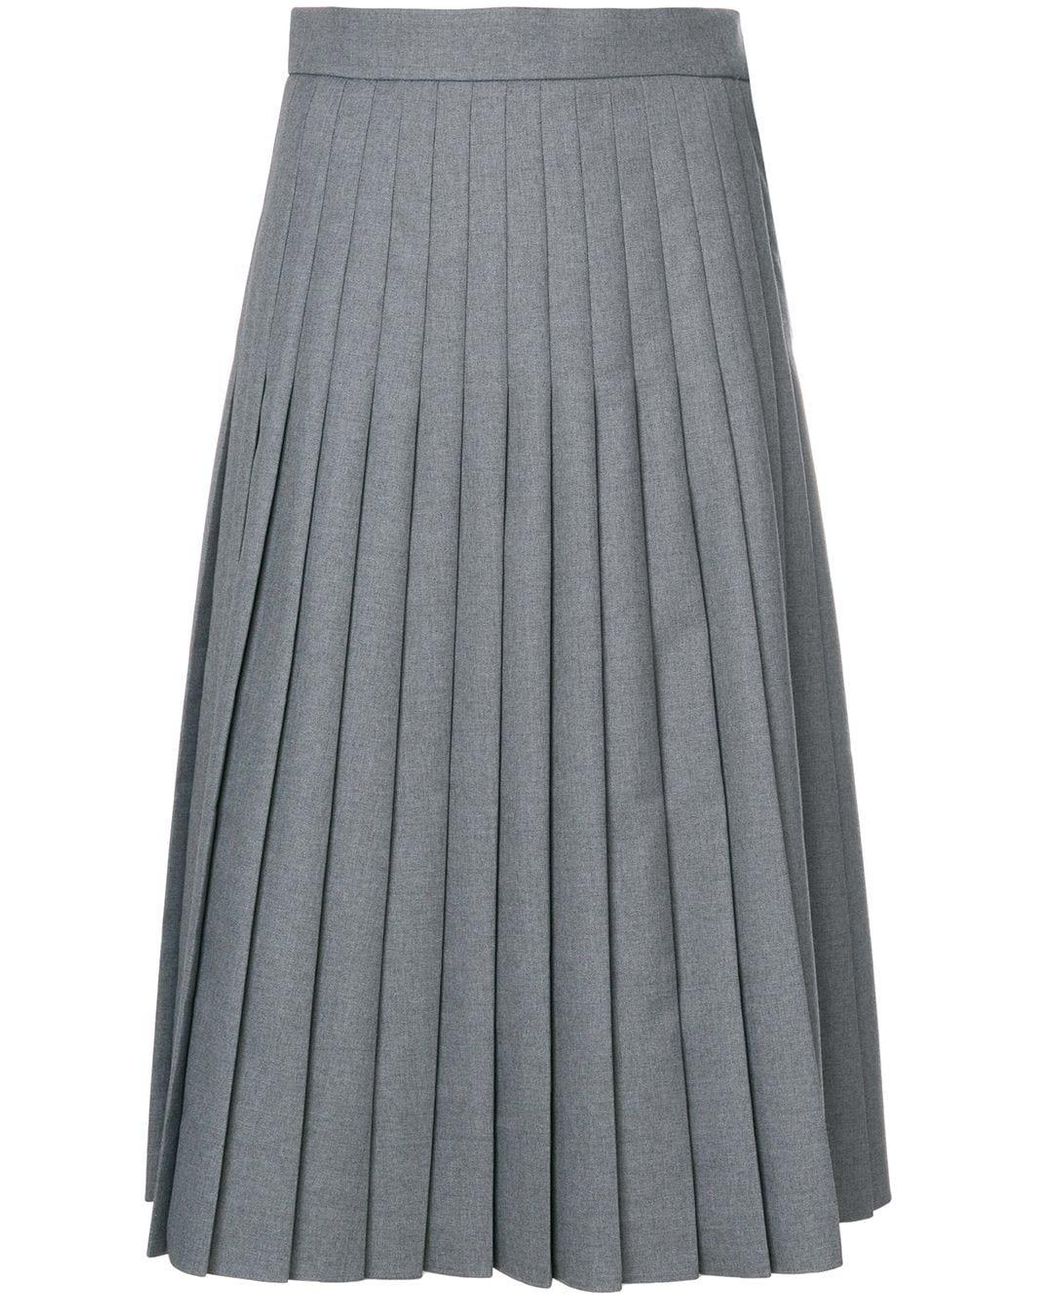 Thom Browne School Uniform Pleated Skirt in Gray | Lyst